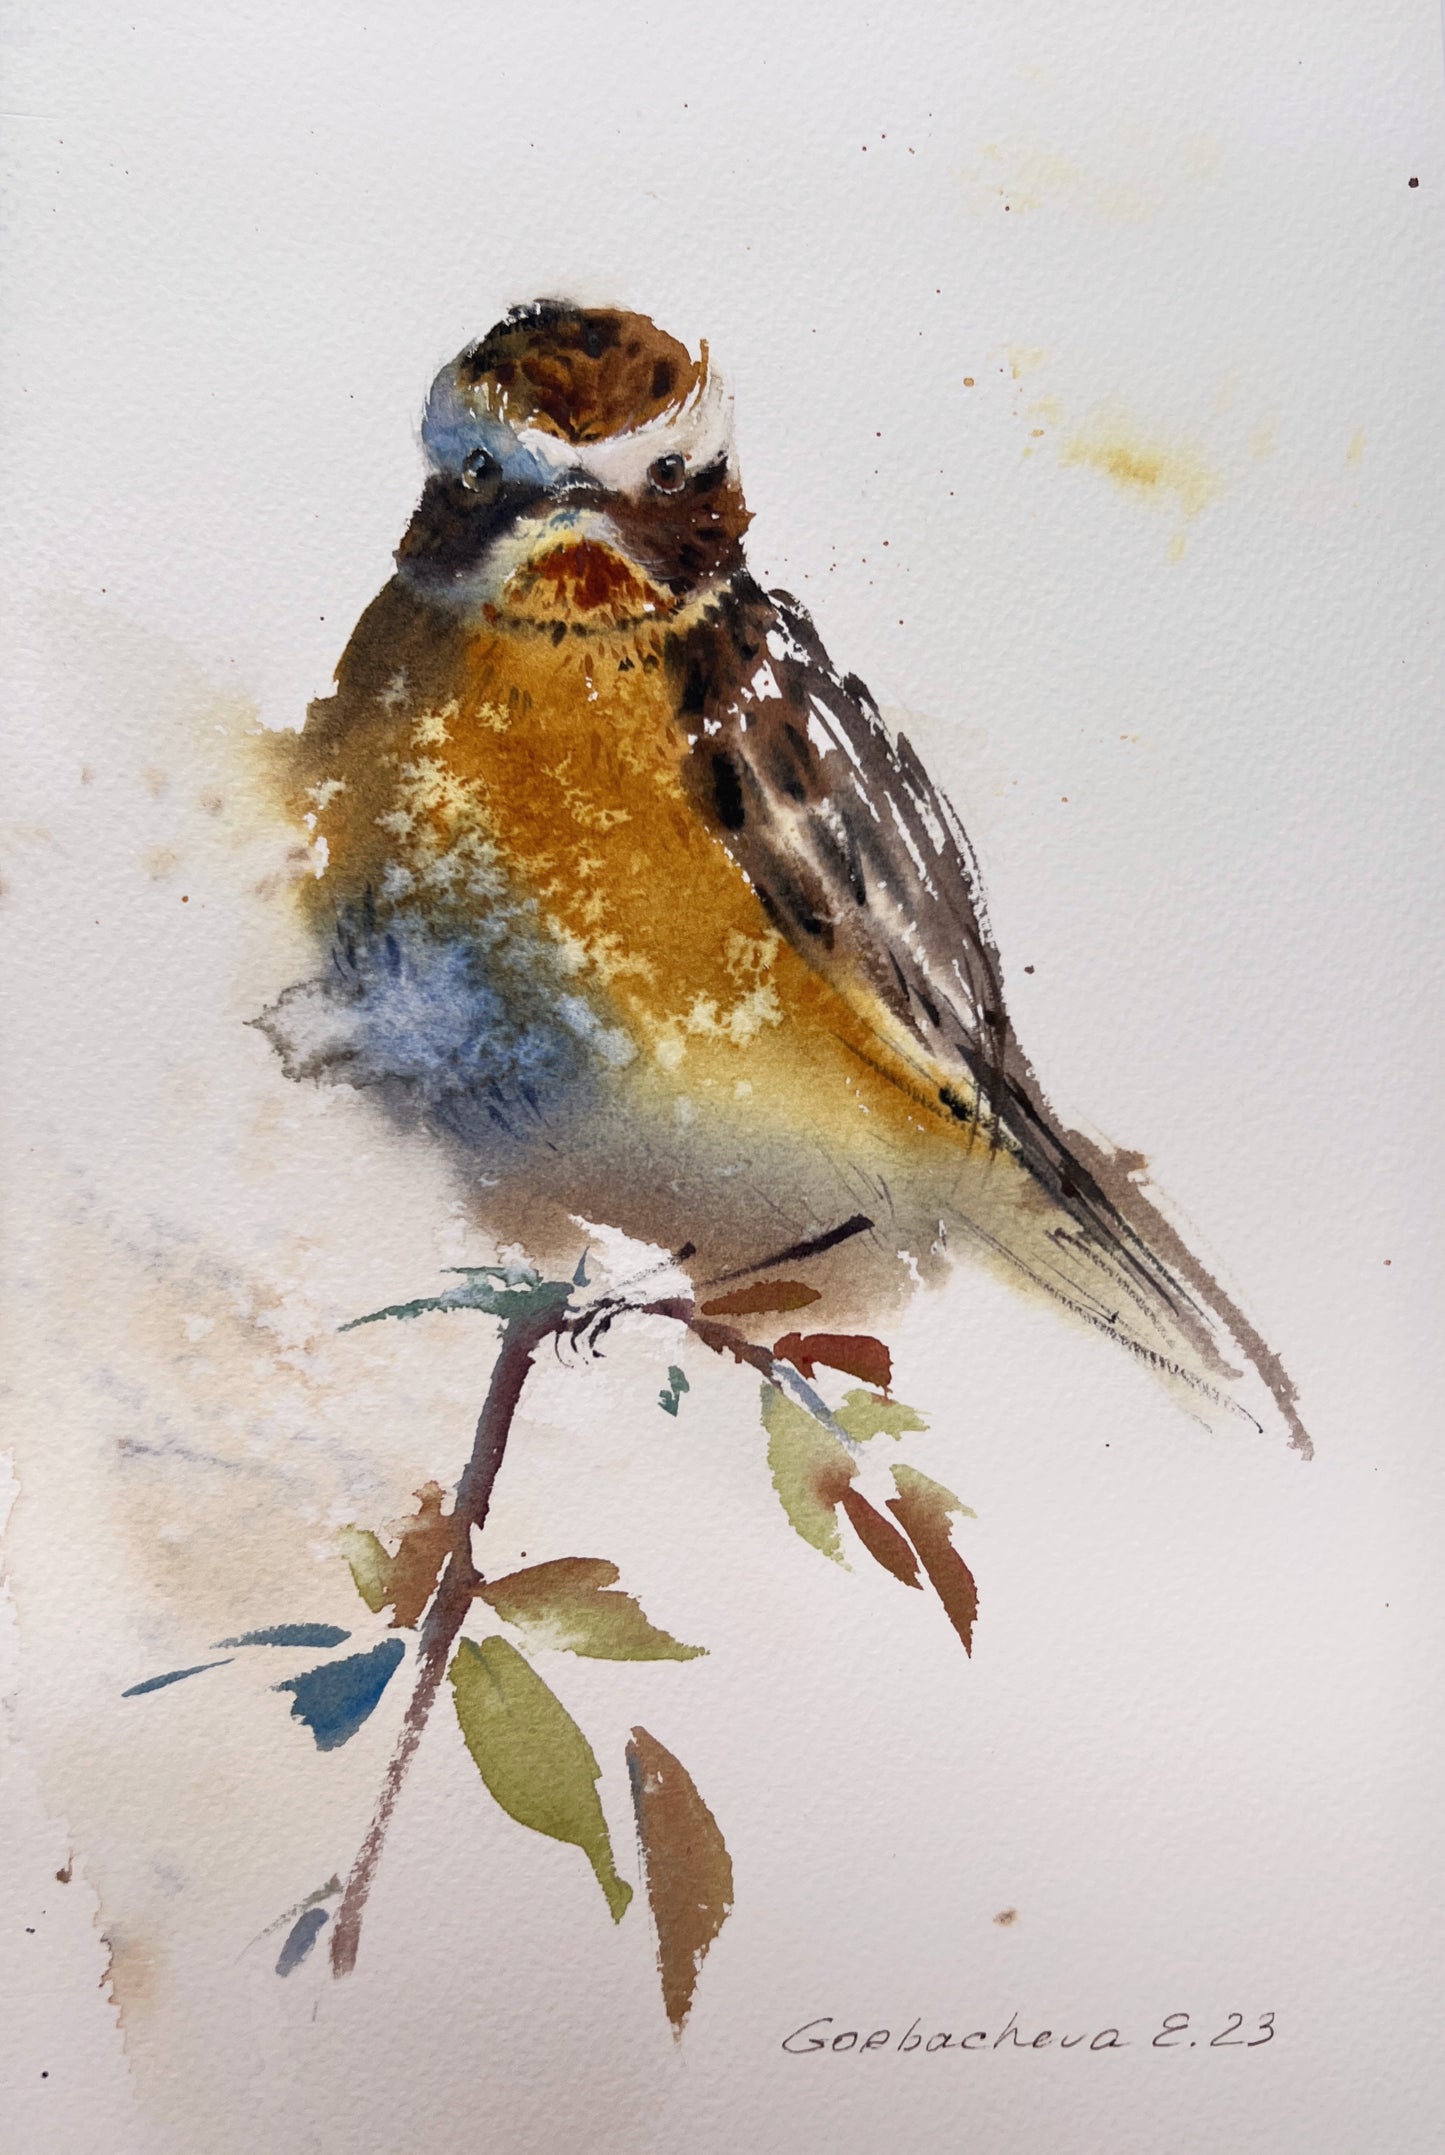 Meadow Bird Original Art Watercolor Painting | Wildlife | Gift Artwork | Home Decor or Art Gift